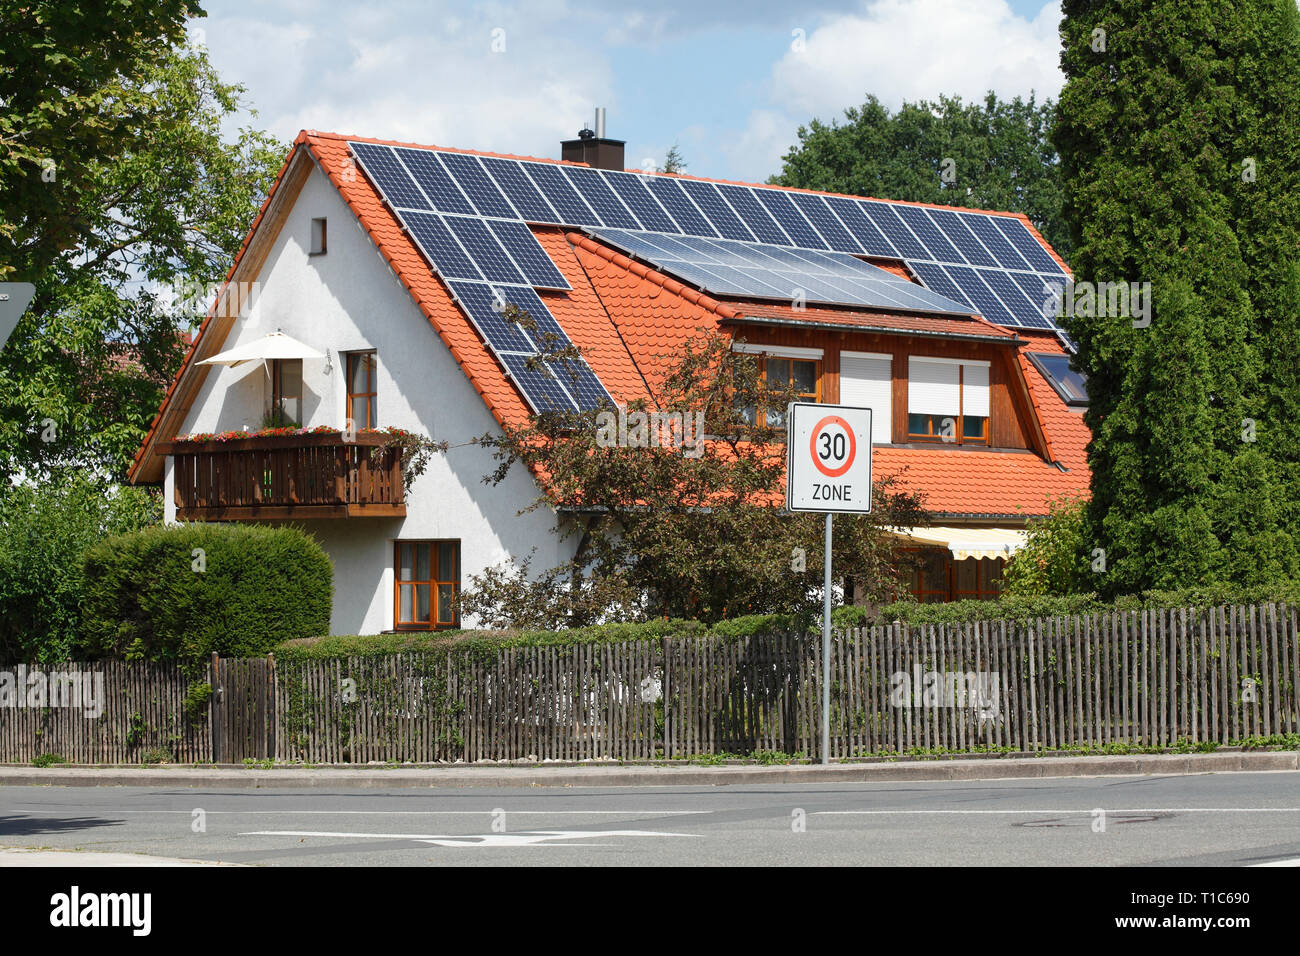 Residential house with solar roof Bayreuth, Bavaria, Germany, Europe I Wohnhaus mit Solardach  Bayreuth, Bayern, Deutschland, Europa i Stock Photo